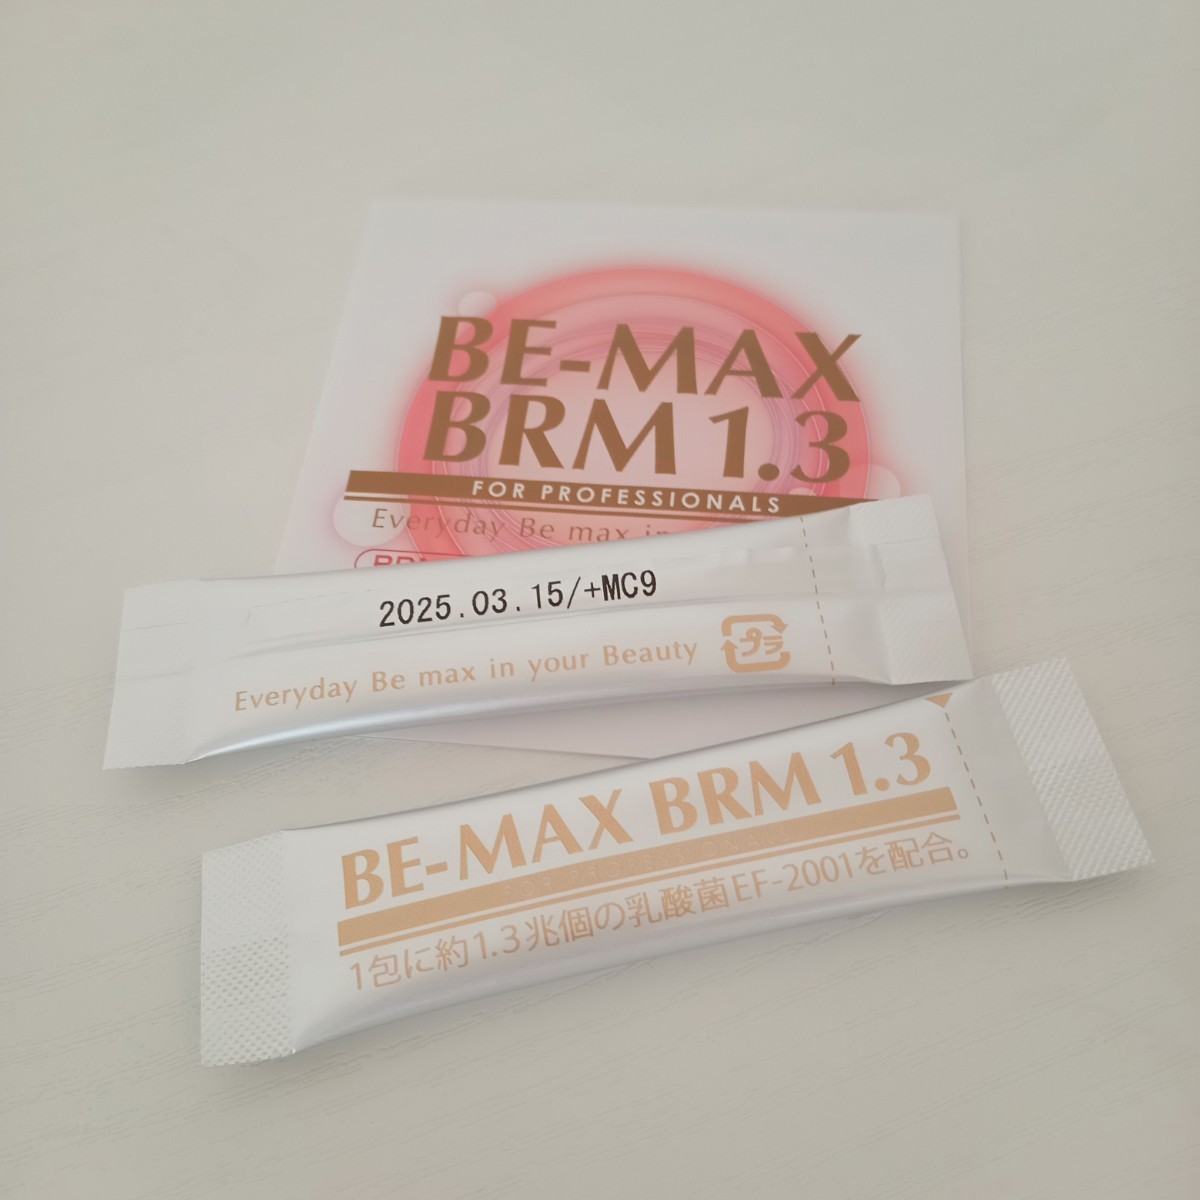 BE-MAX BRM 1.3 (ビーマックス ベルム1.3) 3箱分 ●送料無料●の画像2